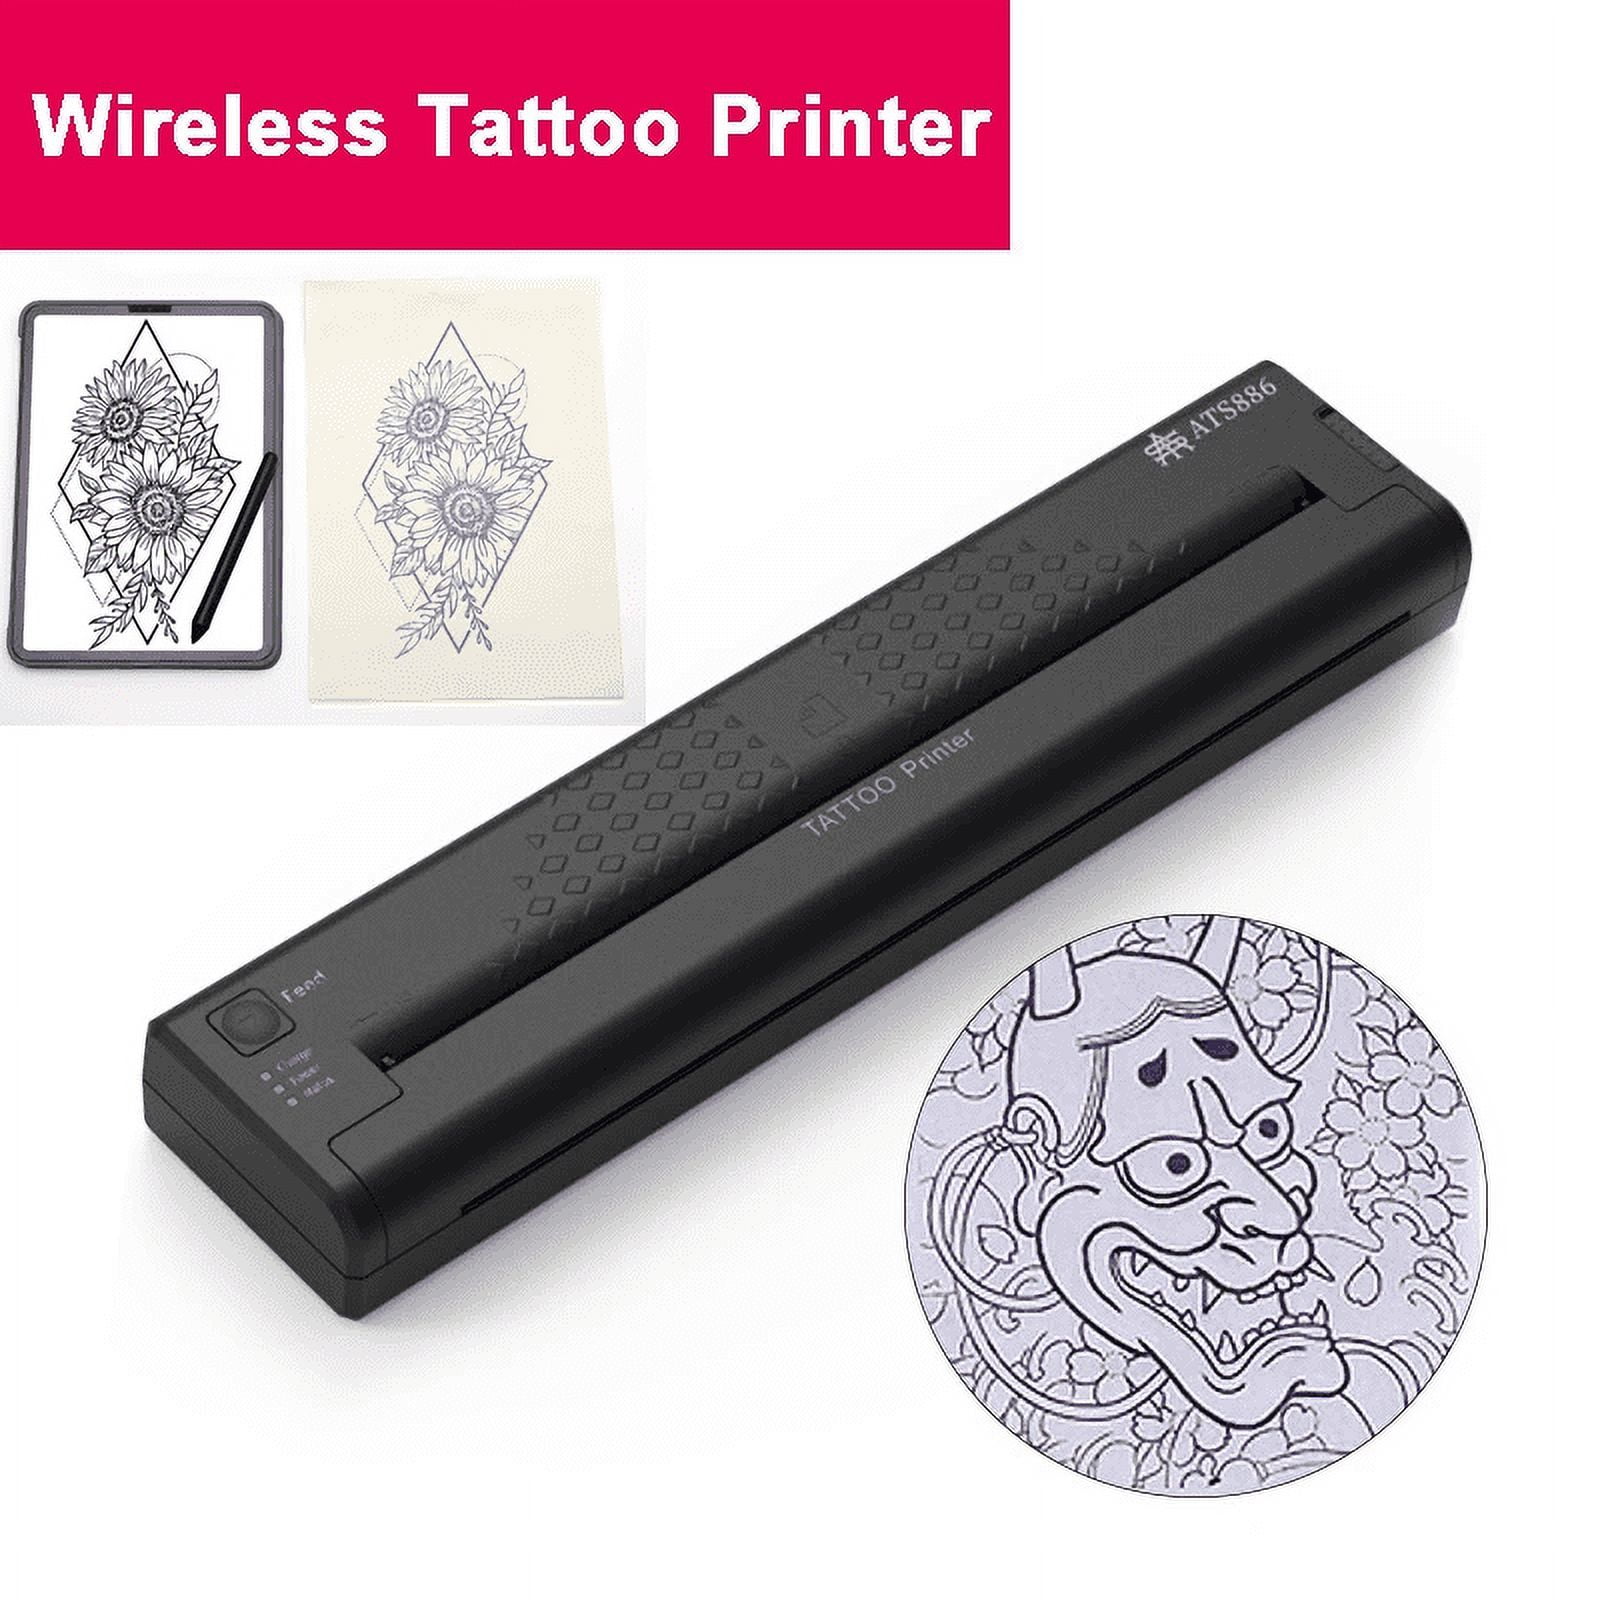 A4 Wireless Tattoo Stencil Printer – Bluetooth-Enabled Thermal Printing